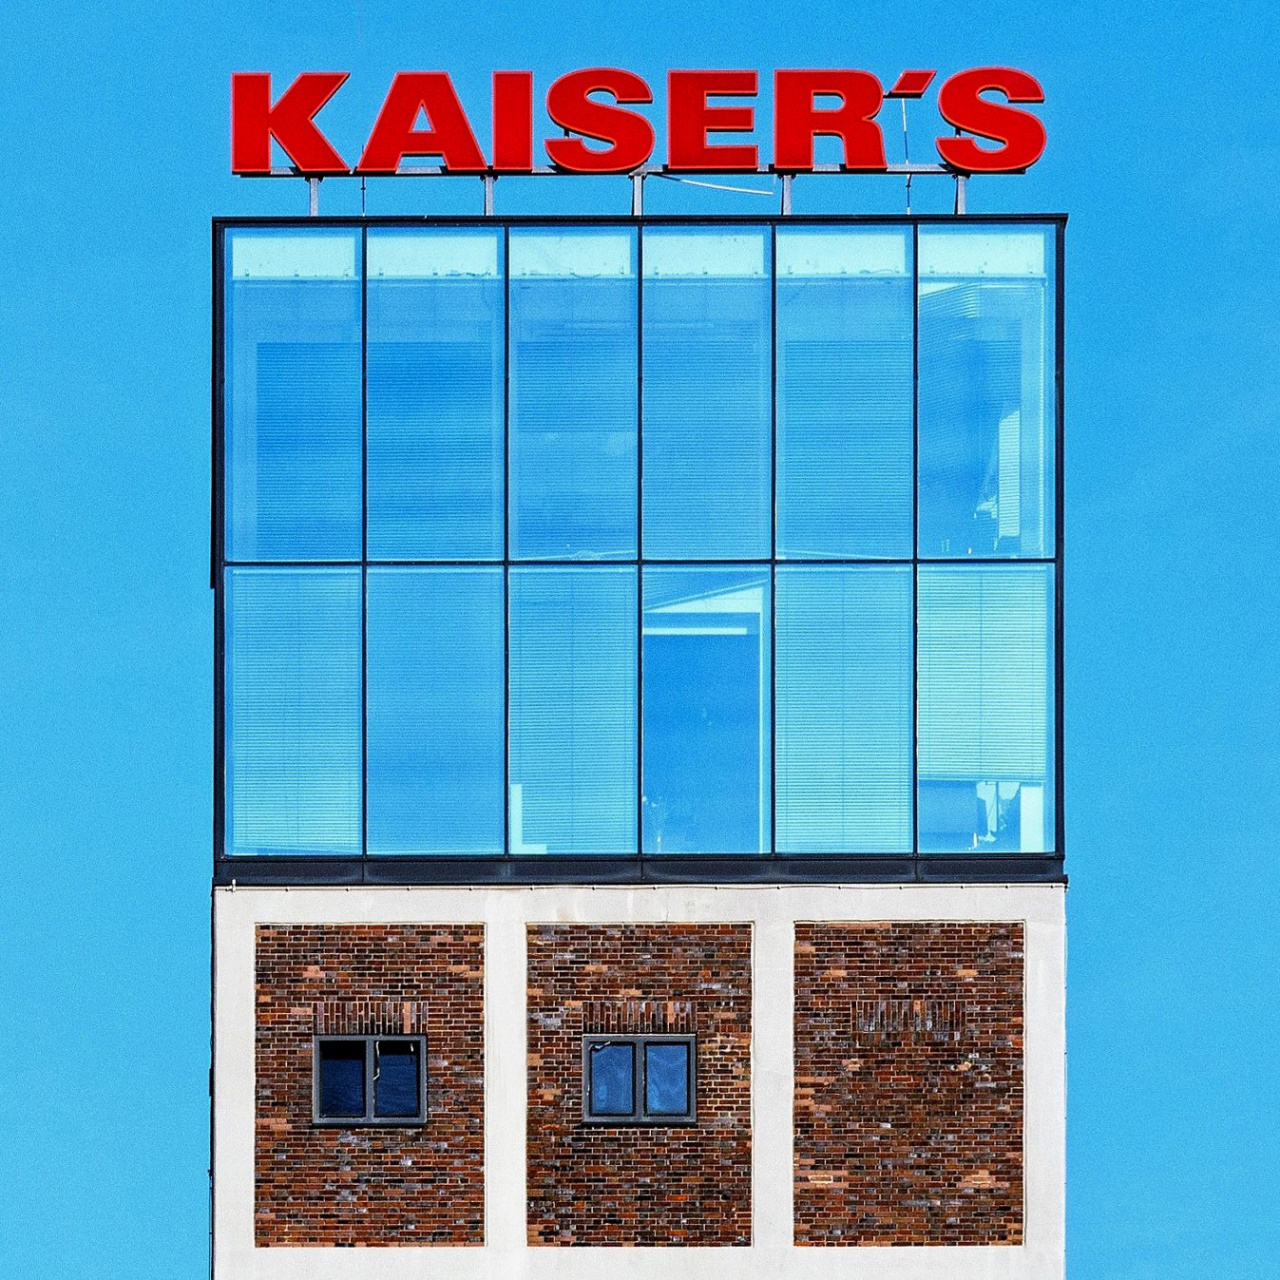 Des Kaiser's neuer Turm